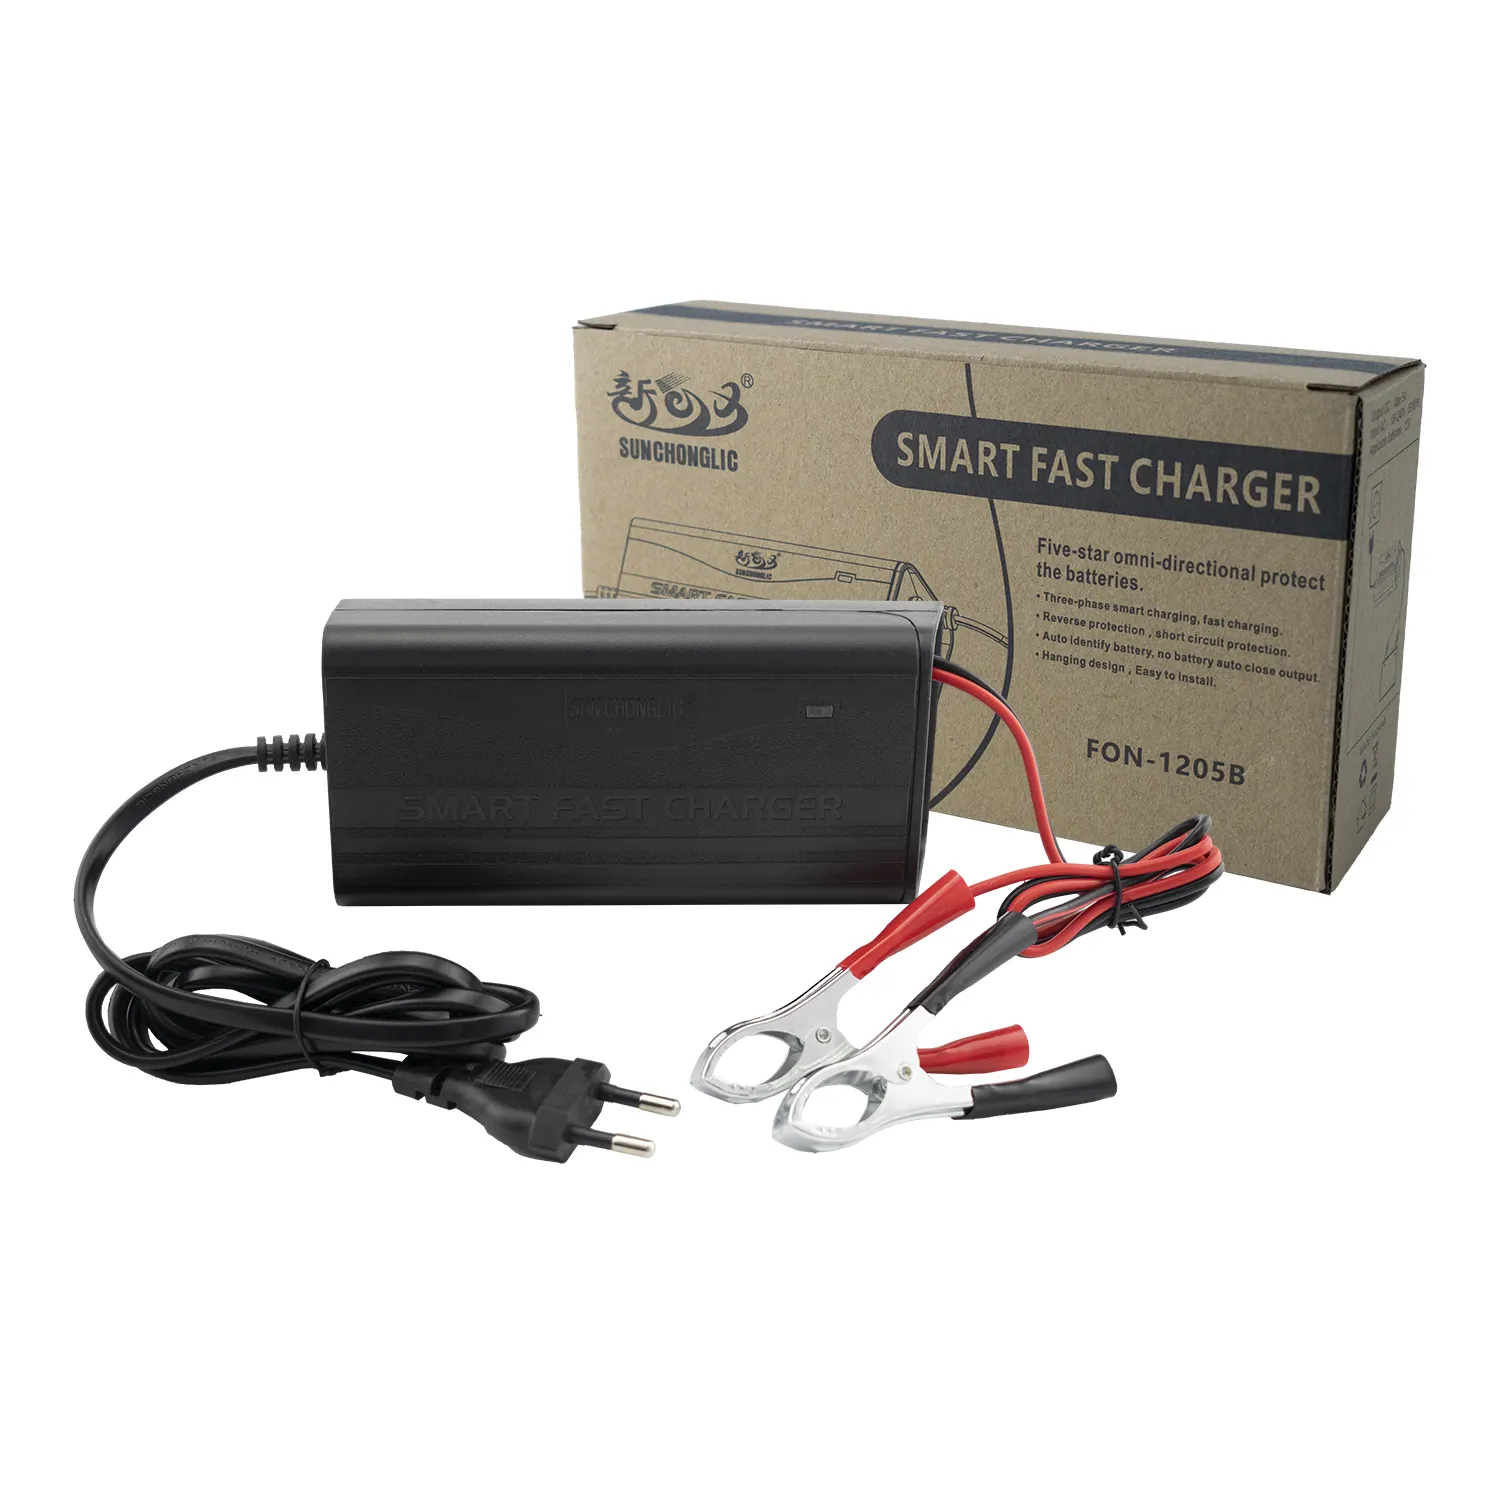 Sunchonglic 12 volt lead acid batteries charger 12V 5A 5 amp smart fast lead acid car battery charger